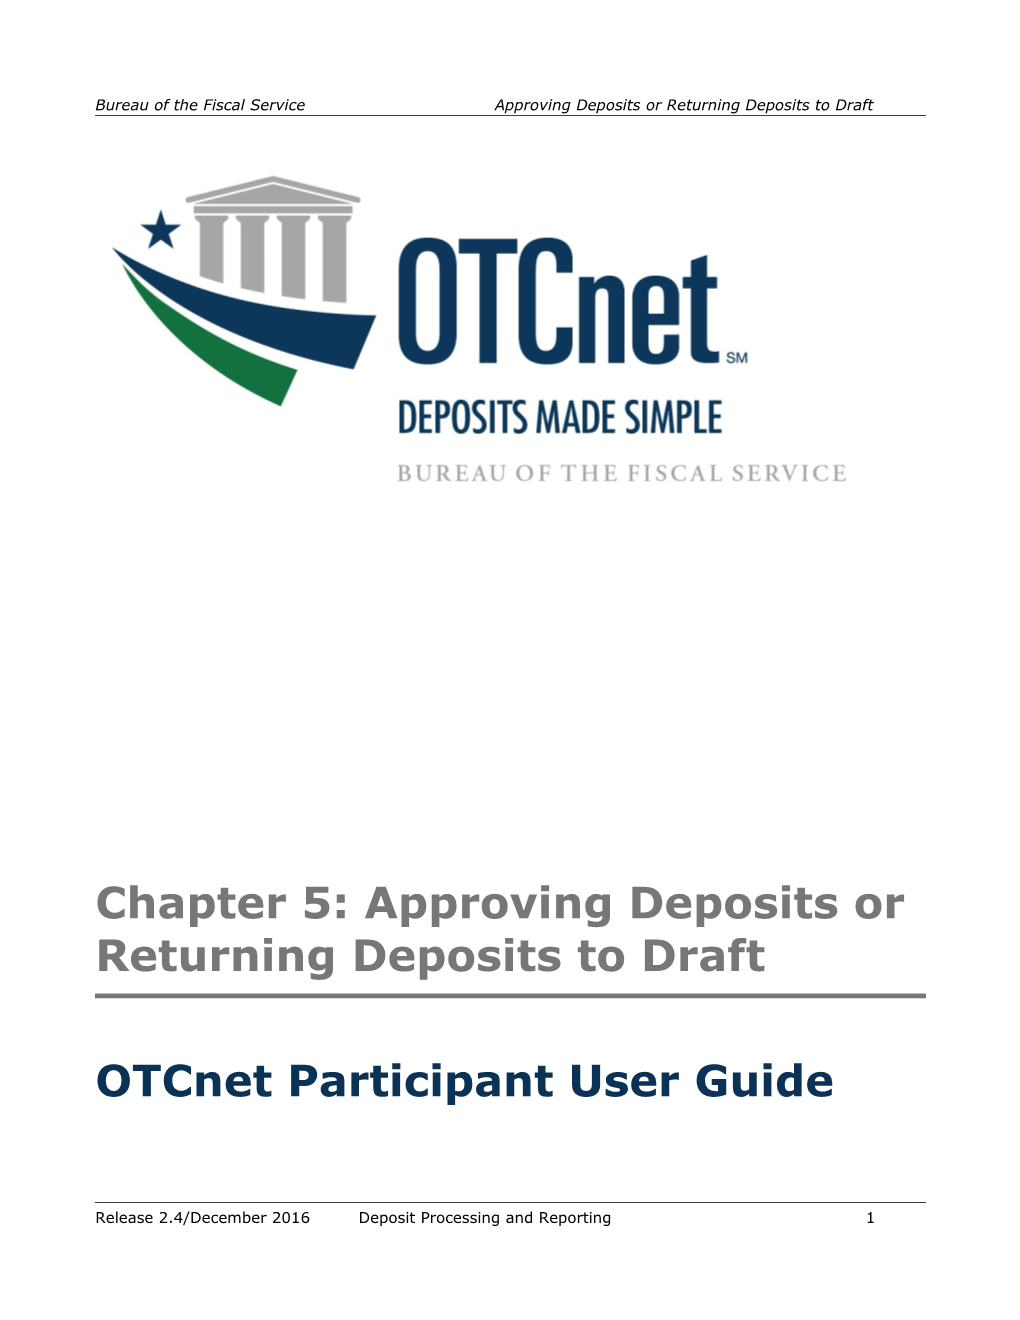 Ch5: Deposit Processing: Approving Deposits Or Returning Deposits to Draft